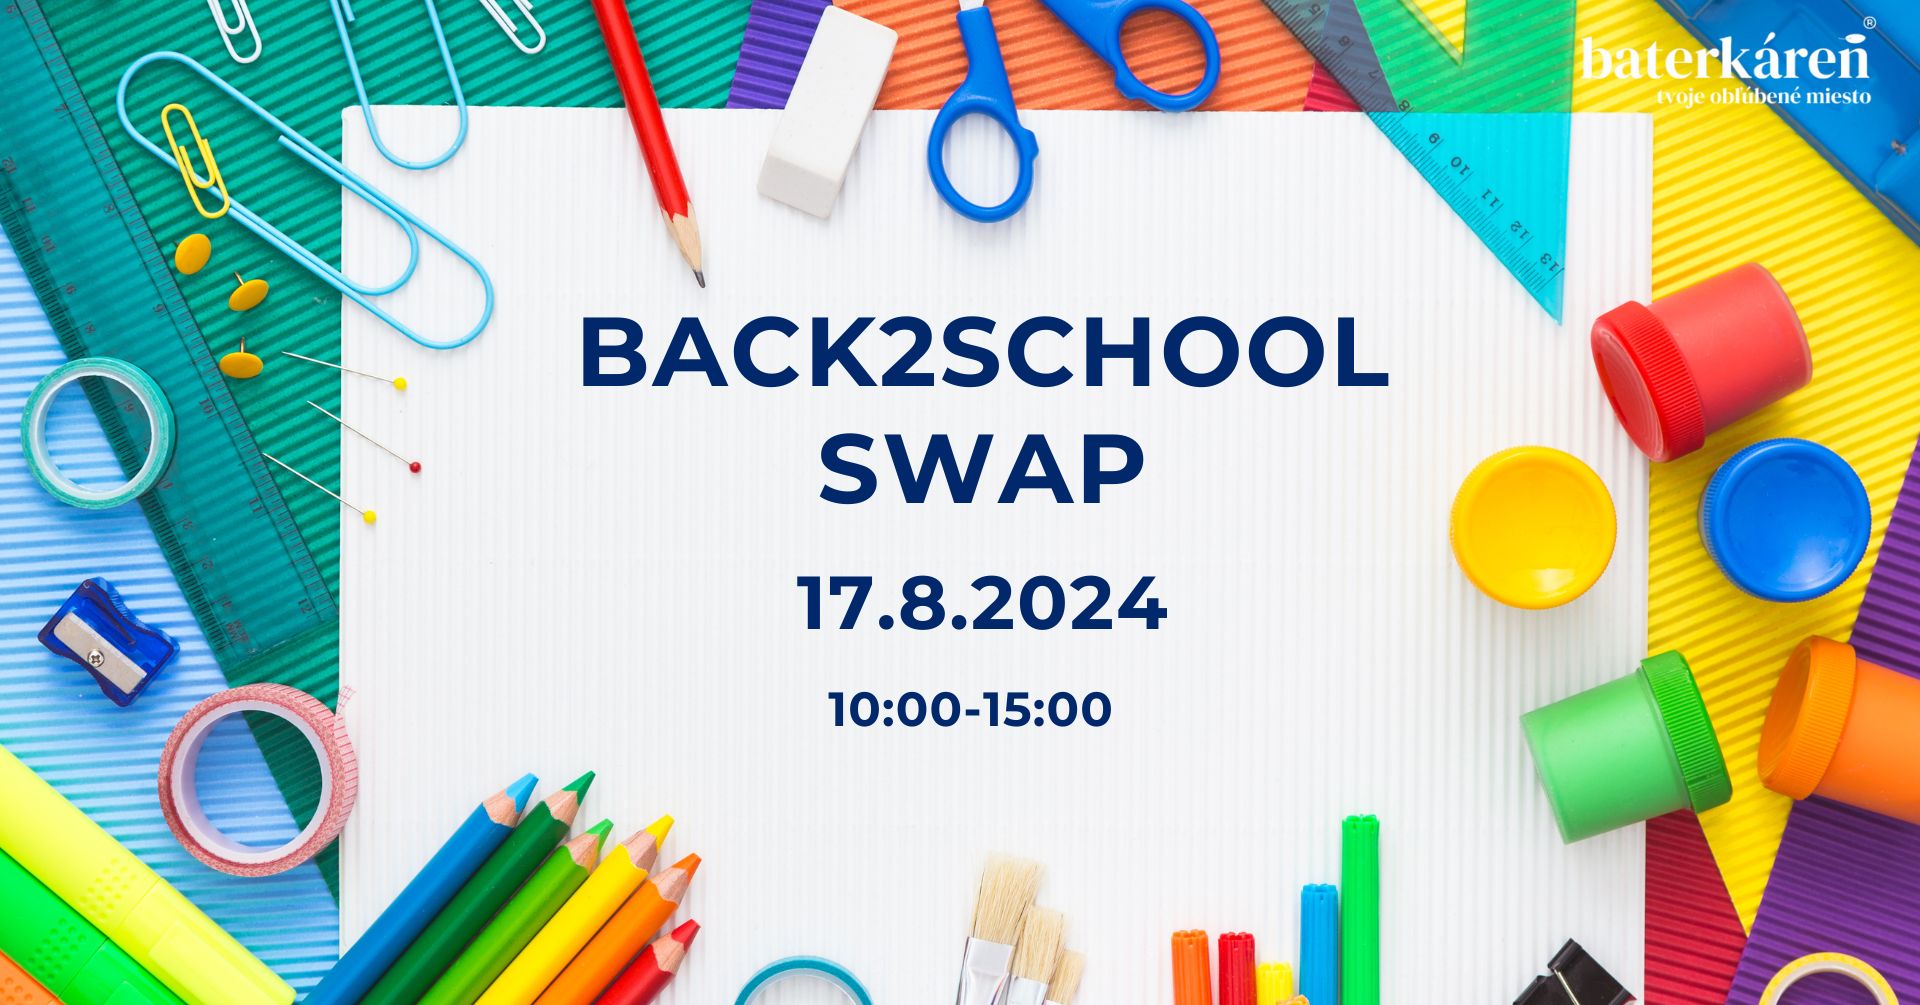 back2school swap august banner event